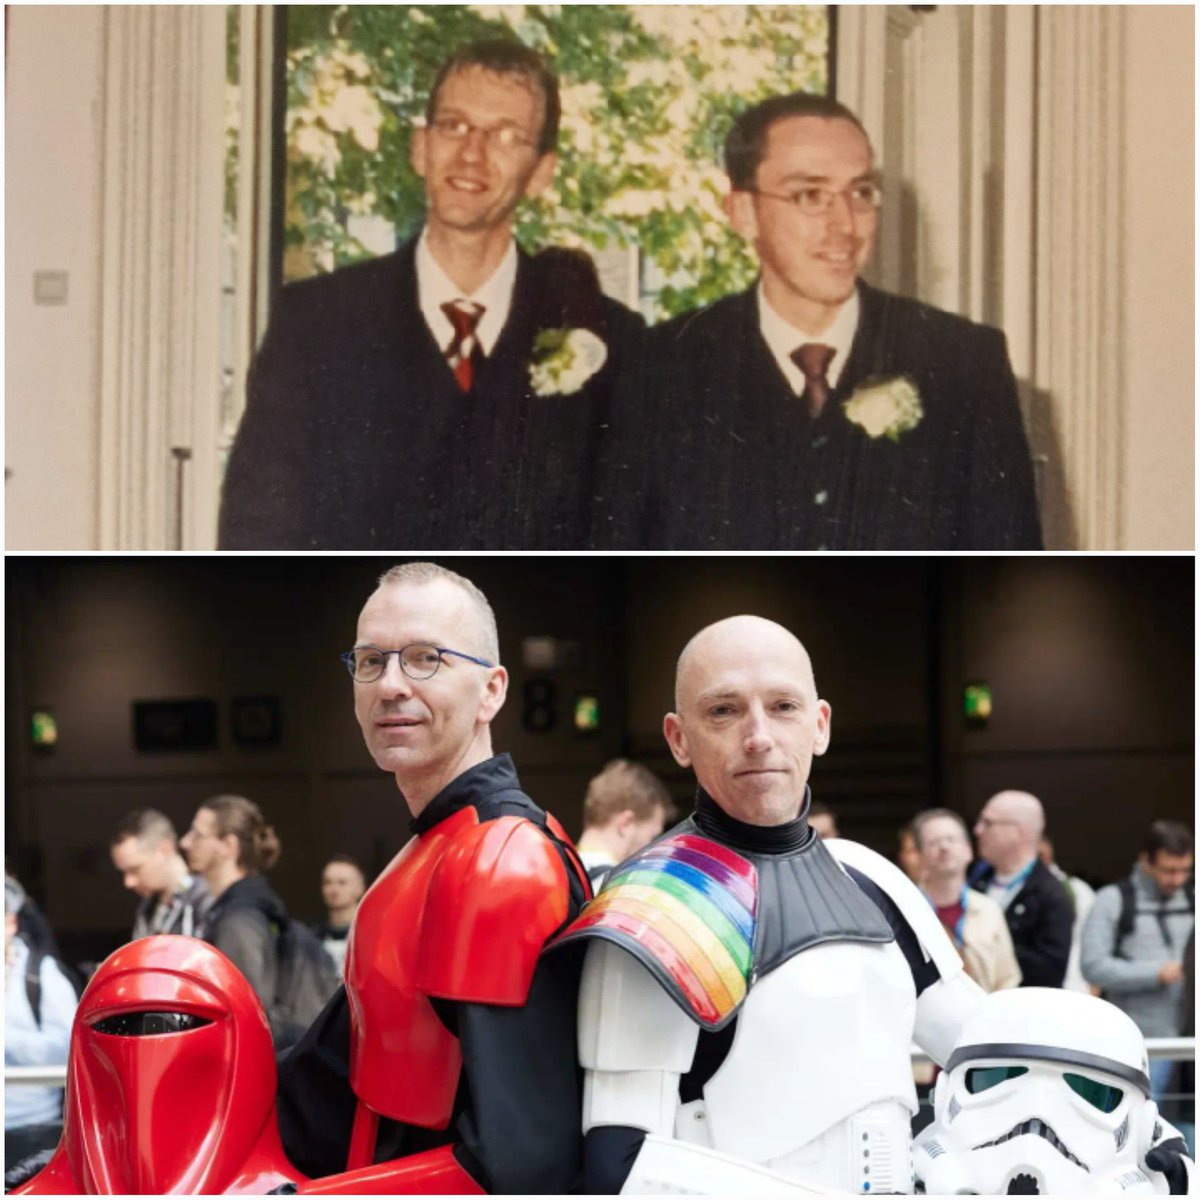 Happy 20th wedding anniversary to us 🥰

#PrideMonth #PrideTrooper #HappyPride #MarriageEquality #HappyAnniversary